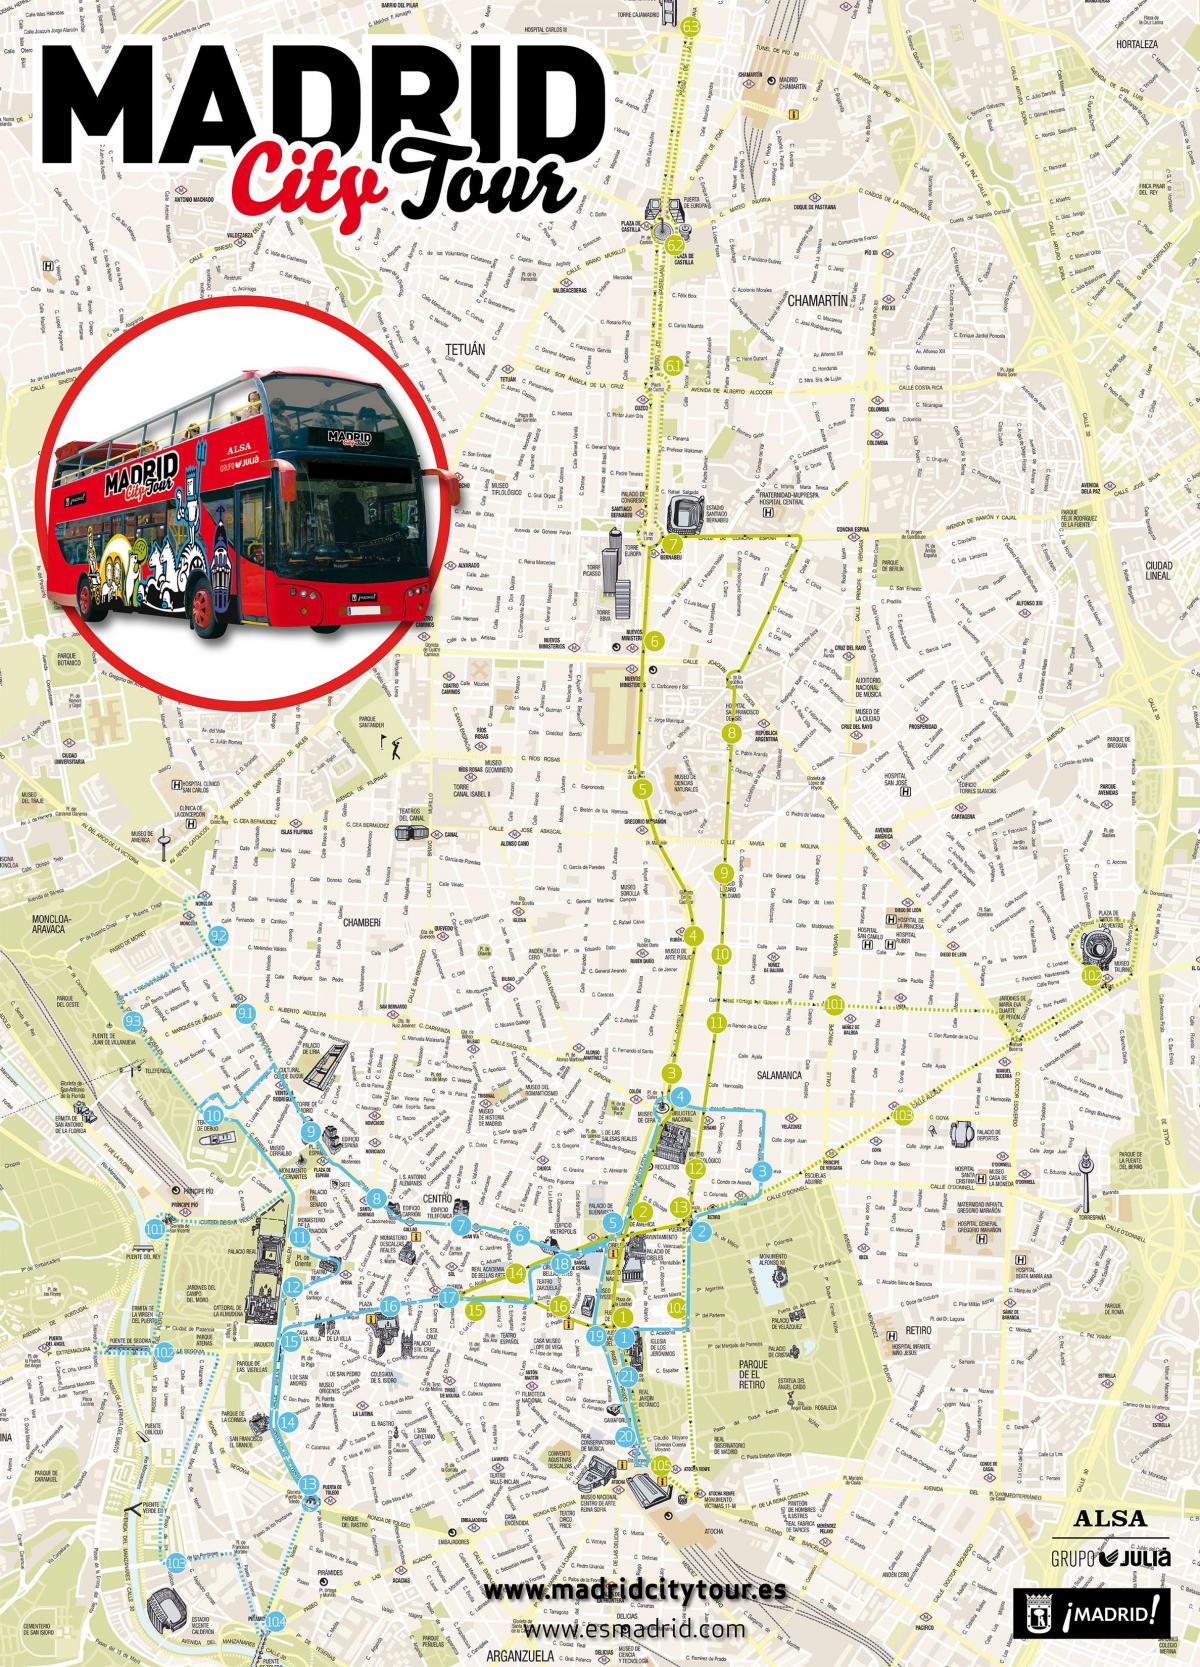 Madrid city bus tour map